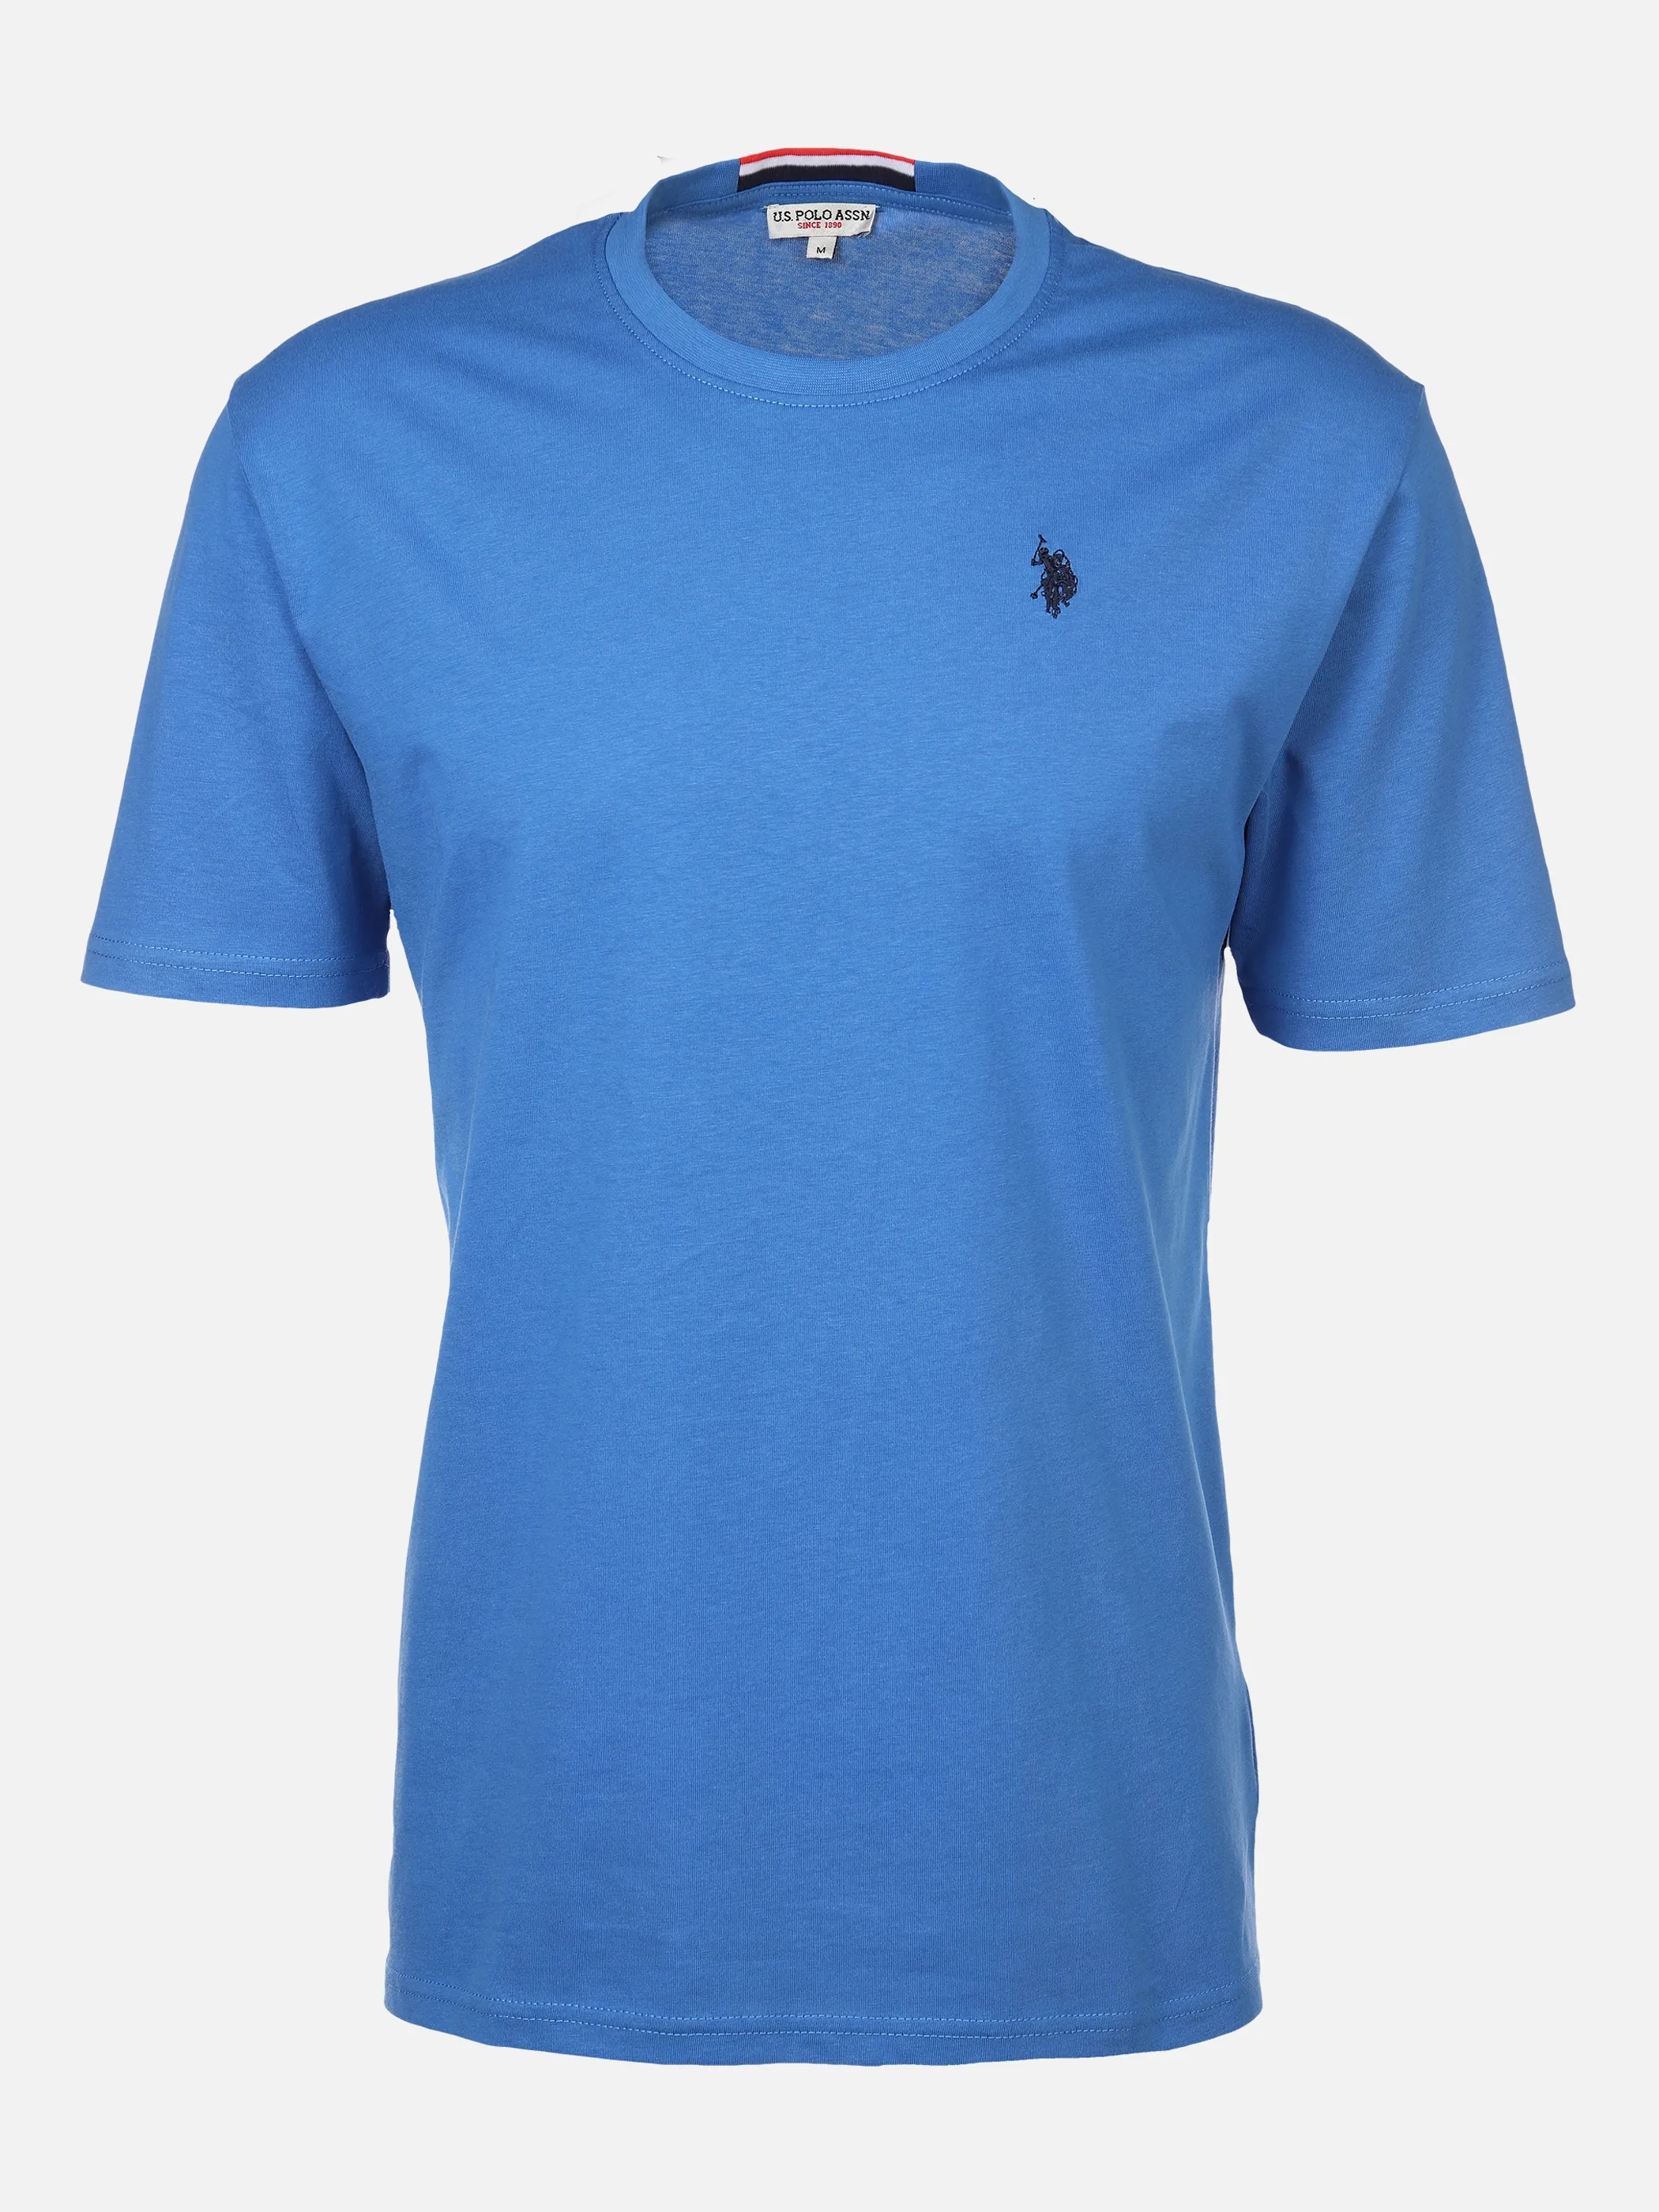 U.S. Polo Assn. He. T-Shirt 1/2 Arm Logostickerei Blau 882065 BLUE 1